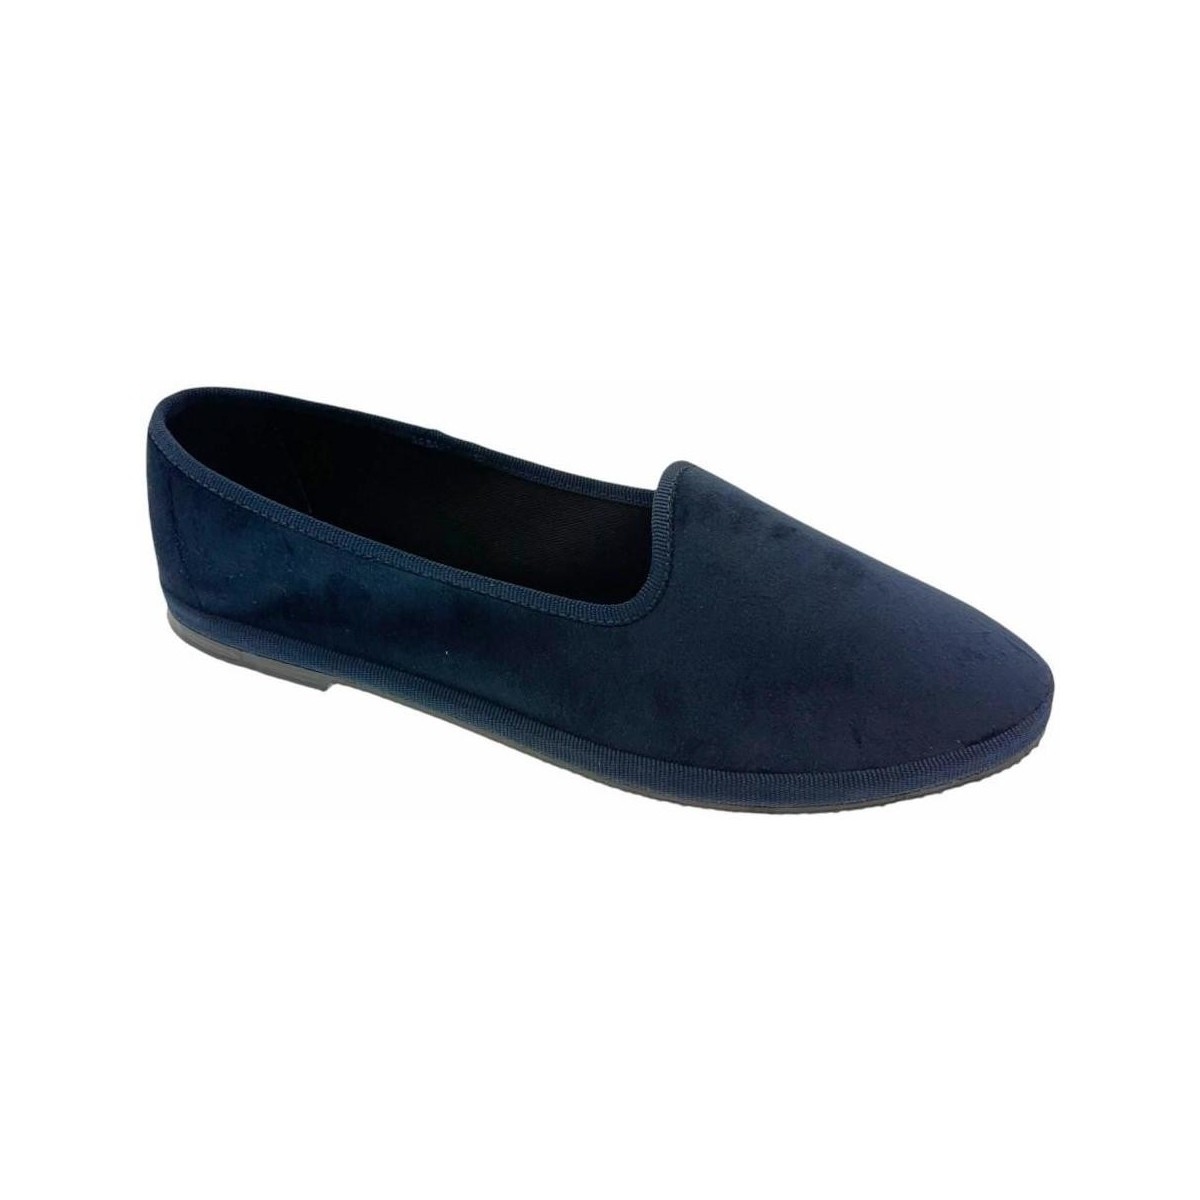 Chaussures Femme Chaussons Shoes4Me FRIPAOLAnotte Bleu